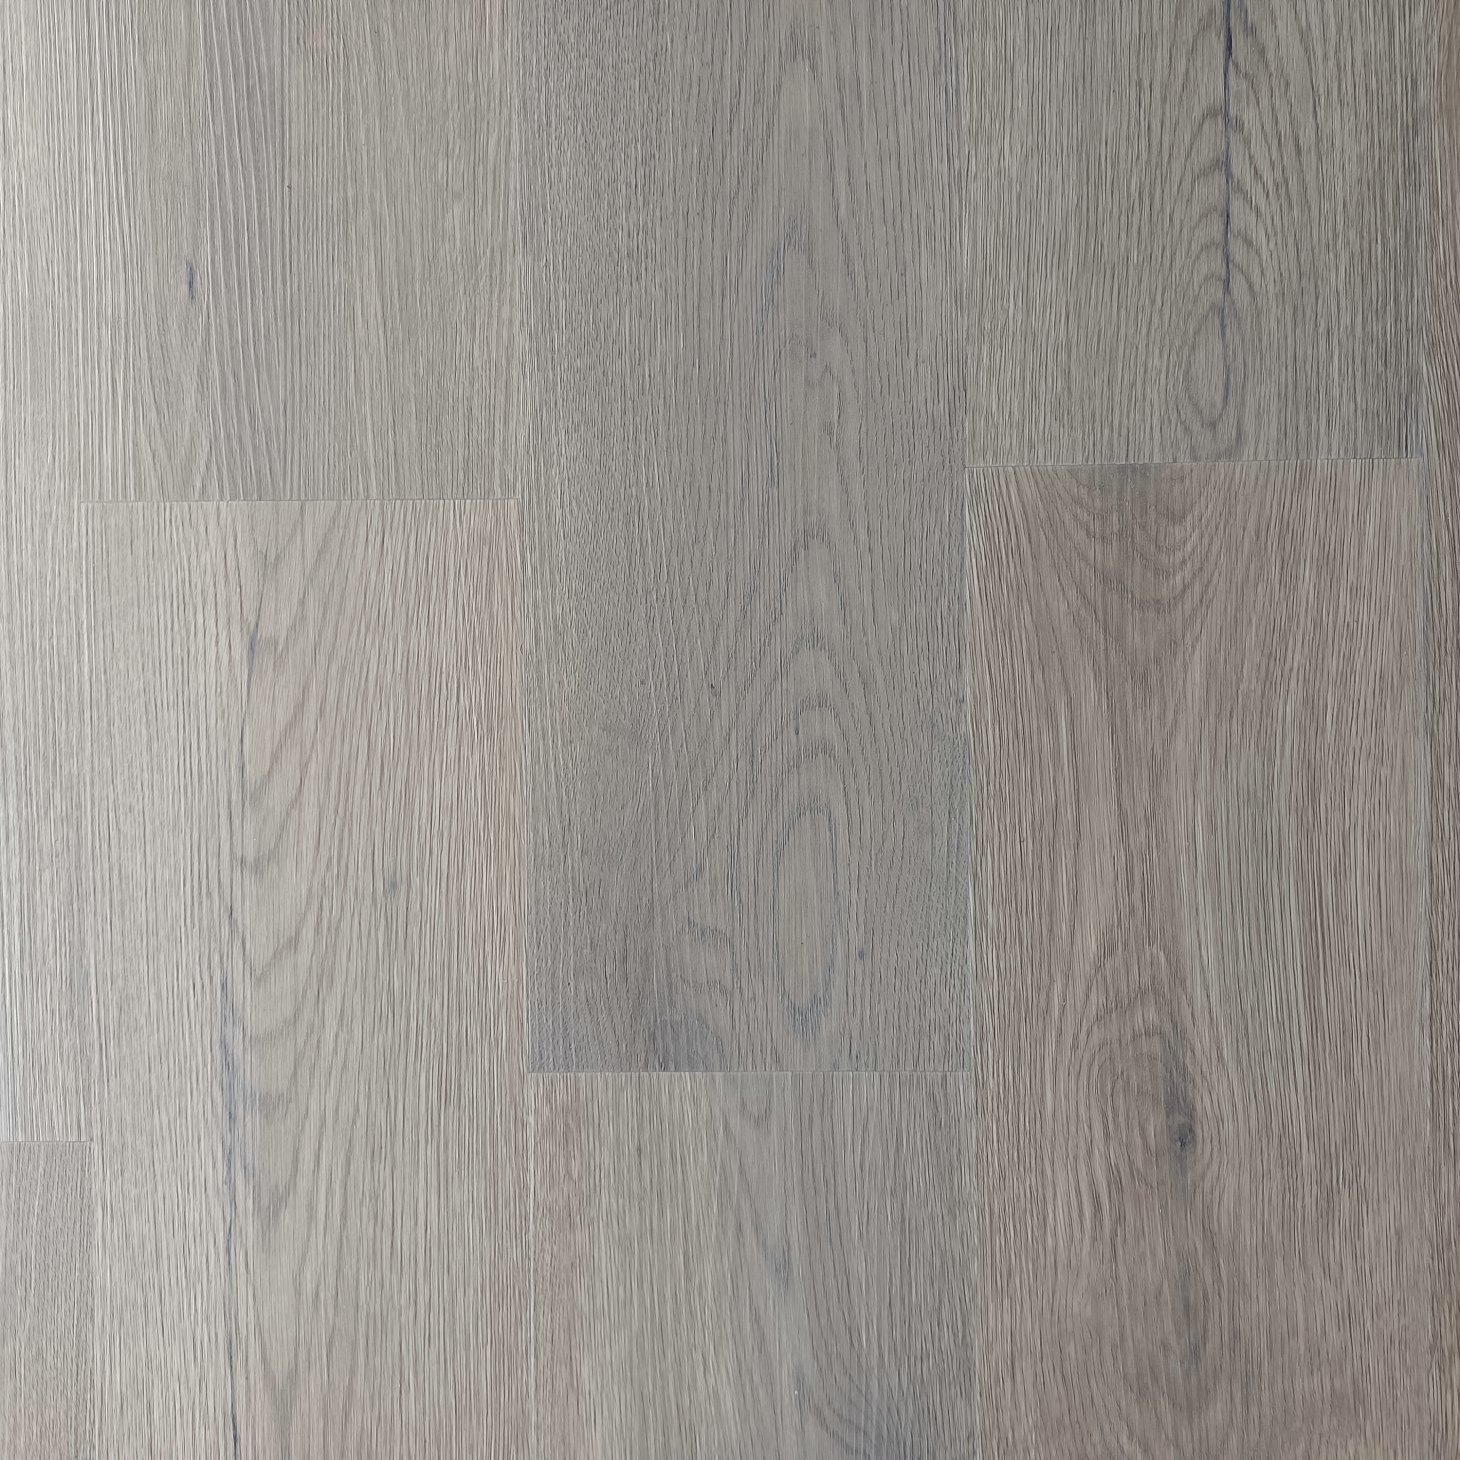 Ordinary Discount Antique Hazel Bamboo Flooring -
 Stable structure ABA luxury rigid spc flooring from Kangton – Kangton